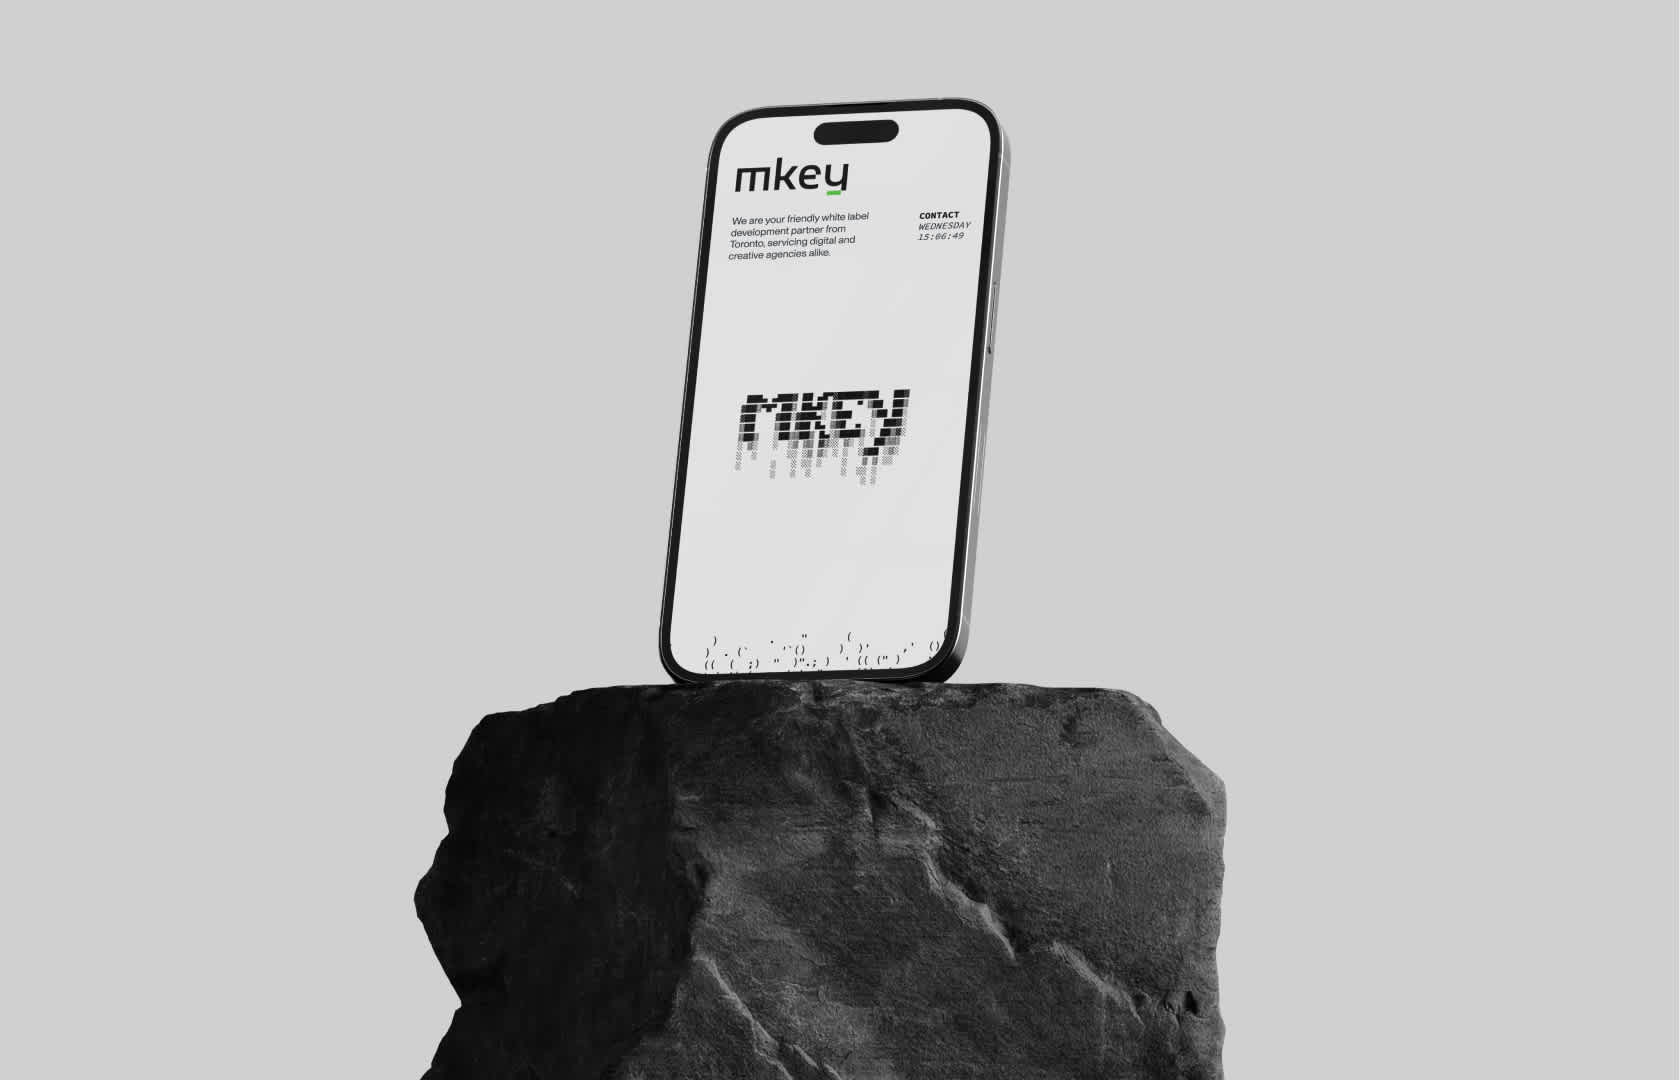 A phone showcasing the MKEY website